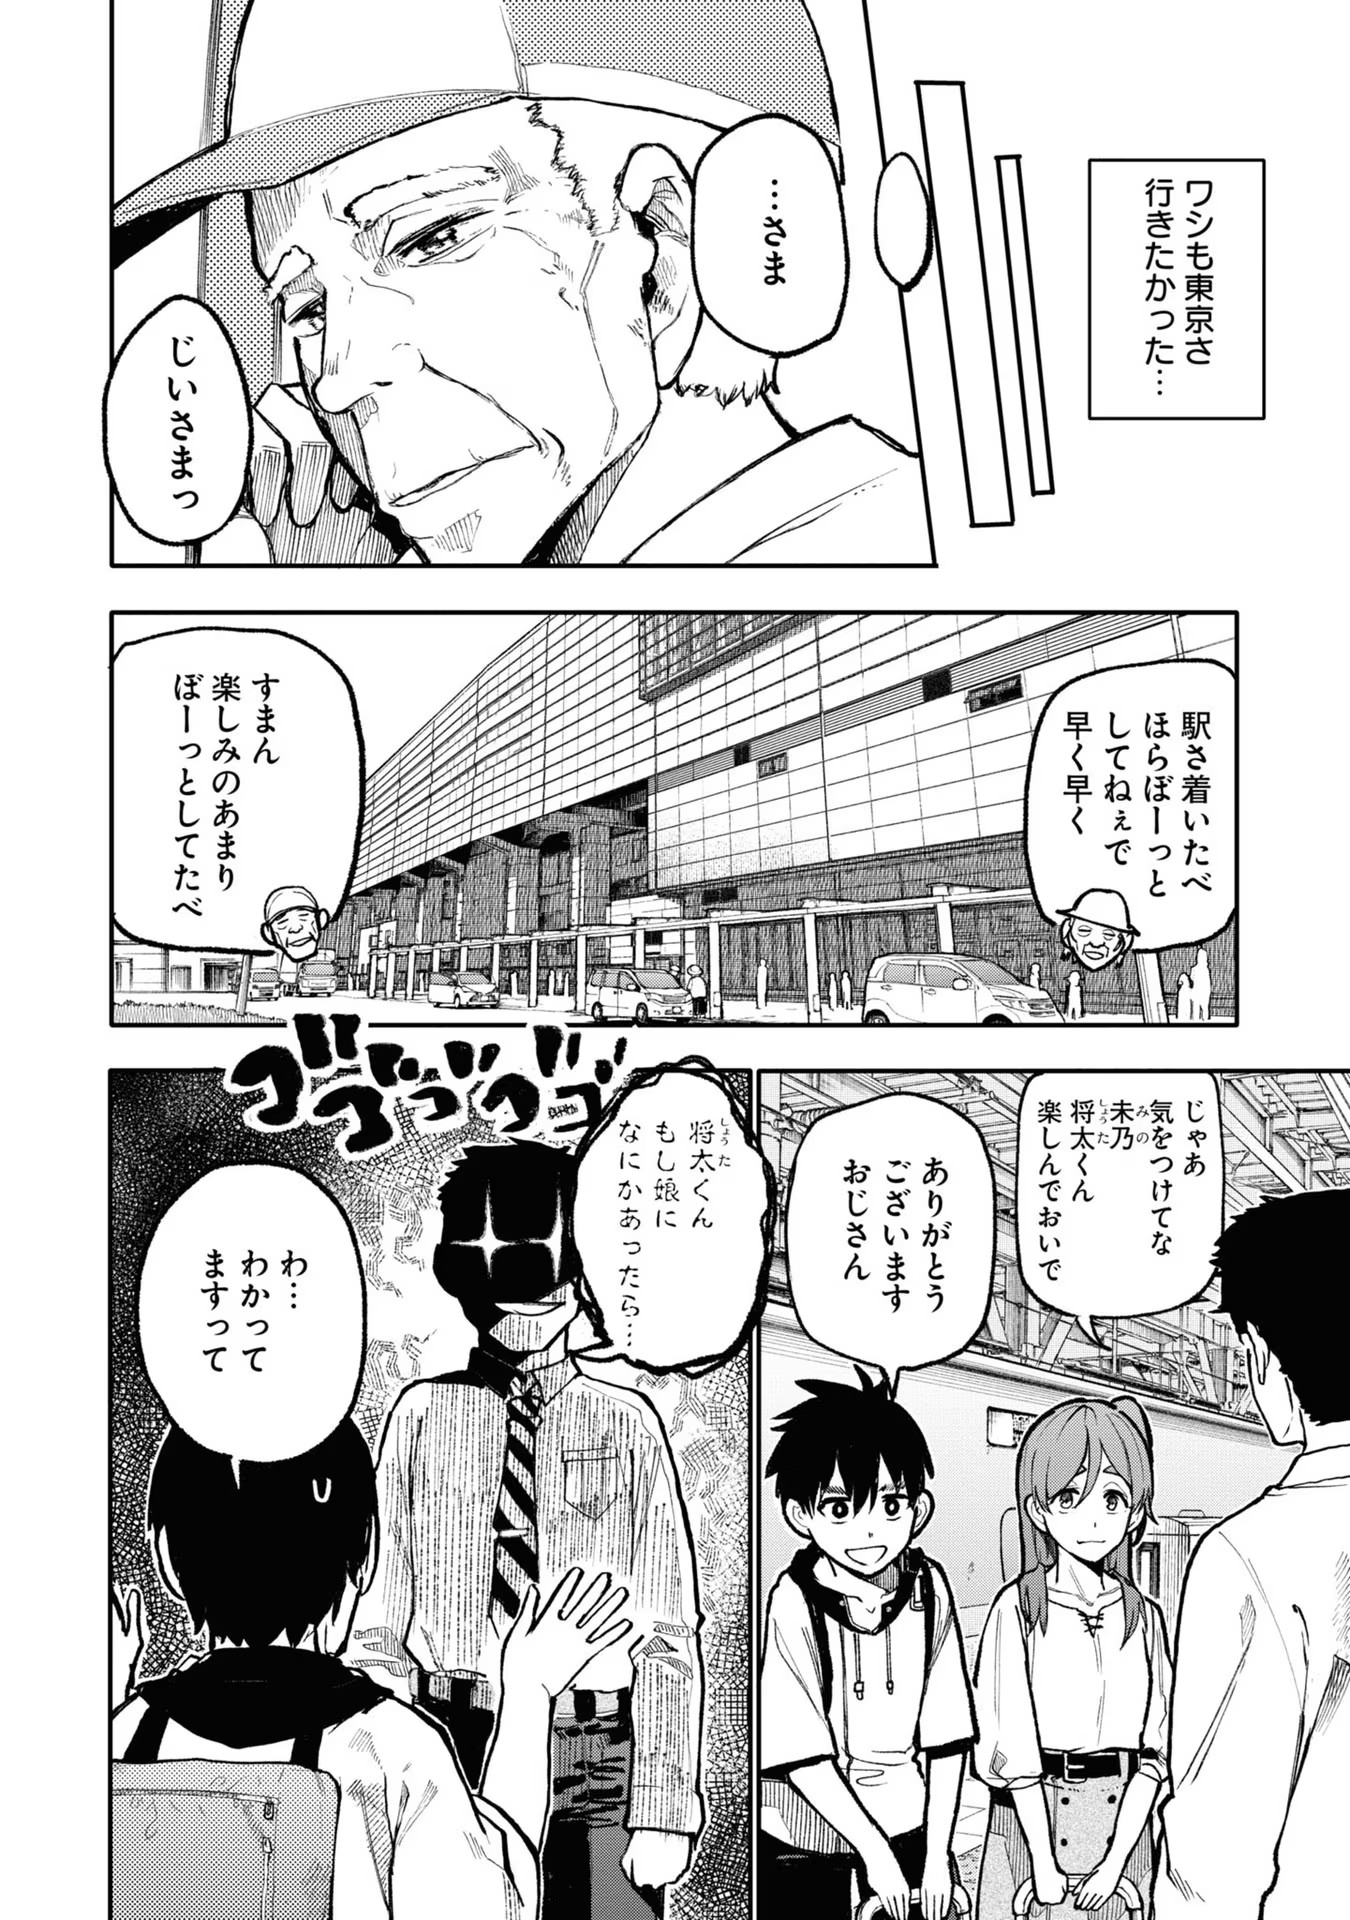 Ojii-san to Obaa-san ga Wakigaetta Hanashi - Chapter 99 - Page 2